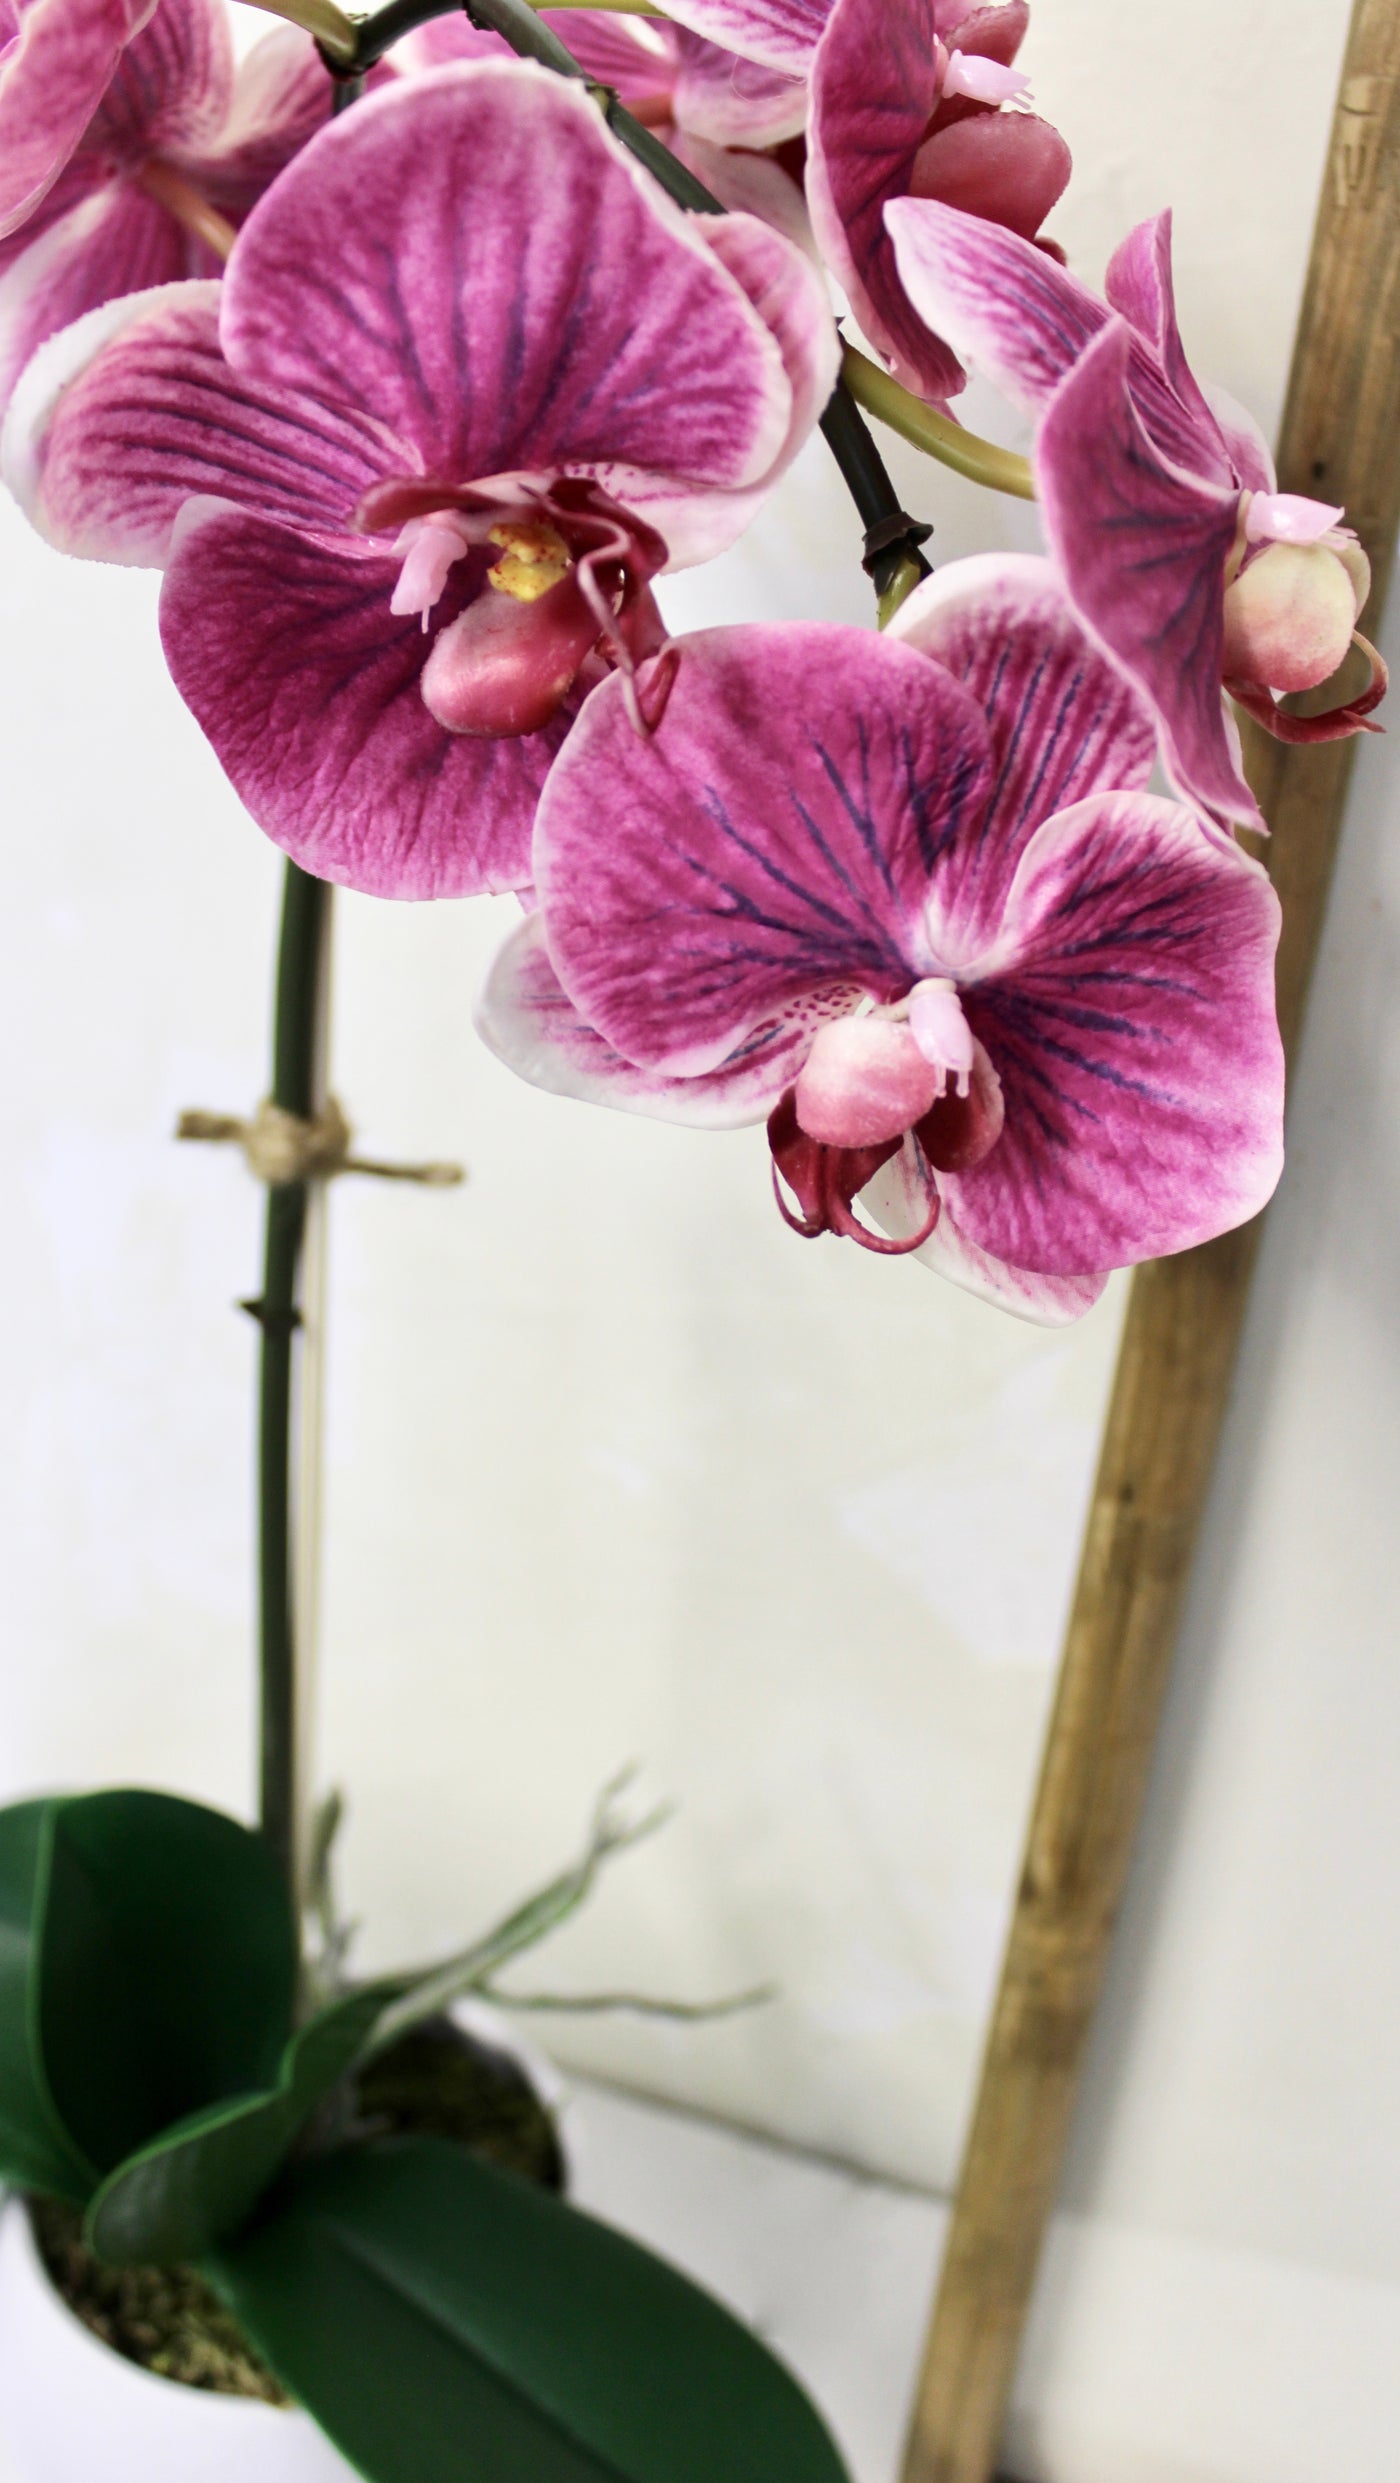 Potted Fuchsia Phalaenopsis Orchid